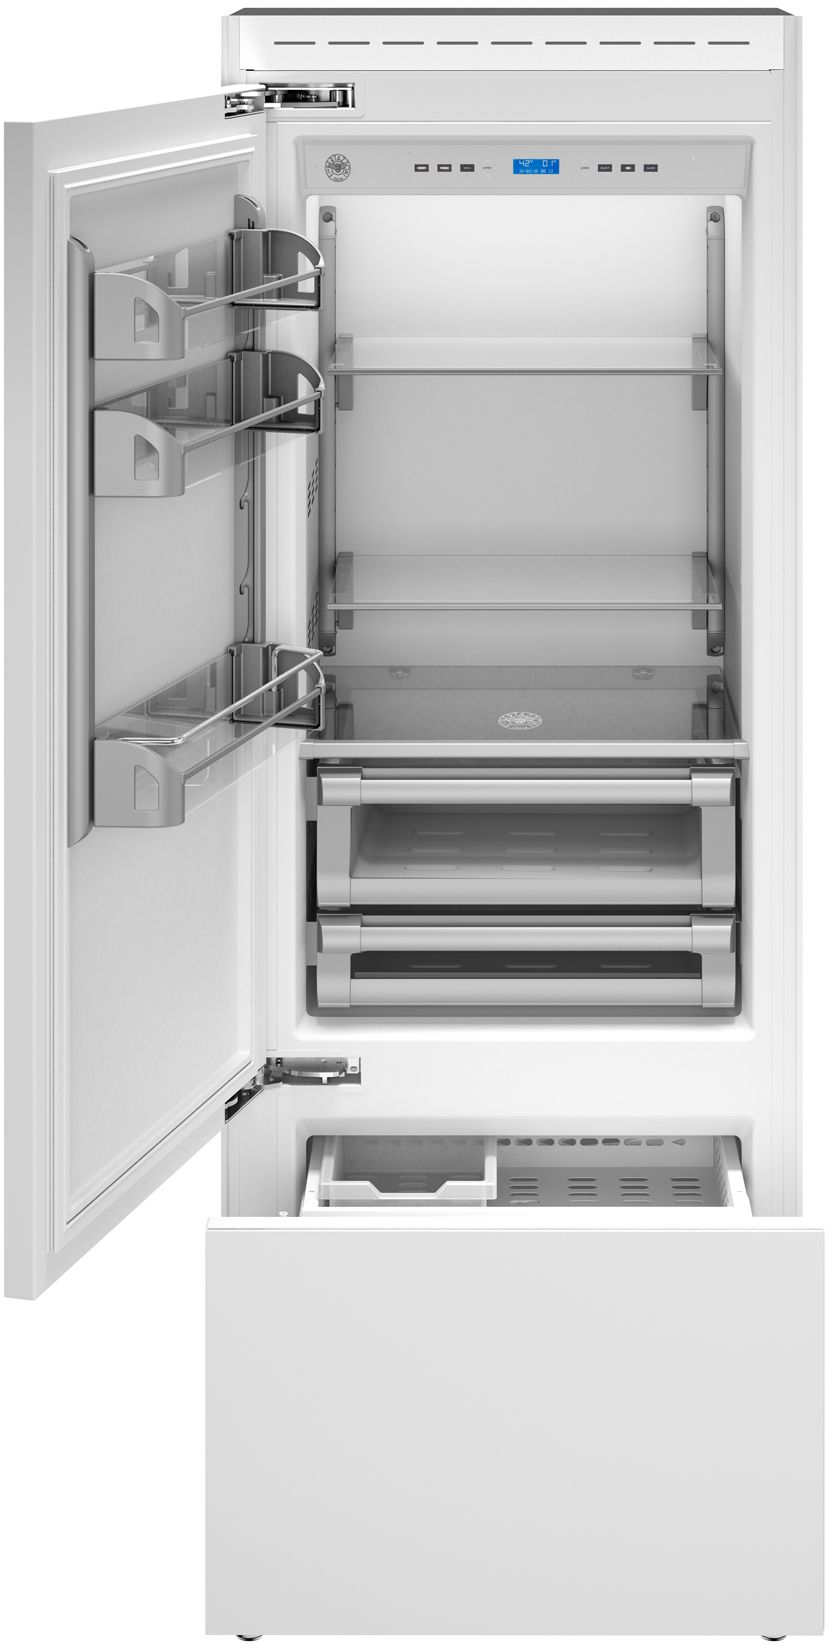 Bertazzoni Heritage Series 14 Cu. Ft. Panel Ready Built In Refrigerator